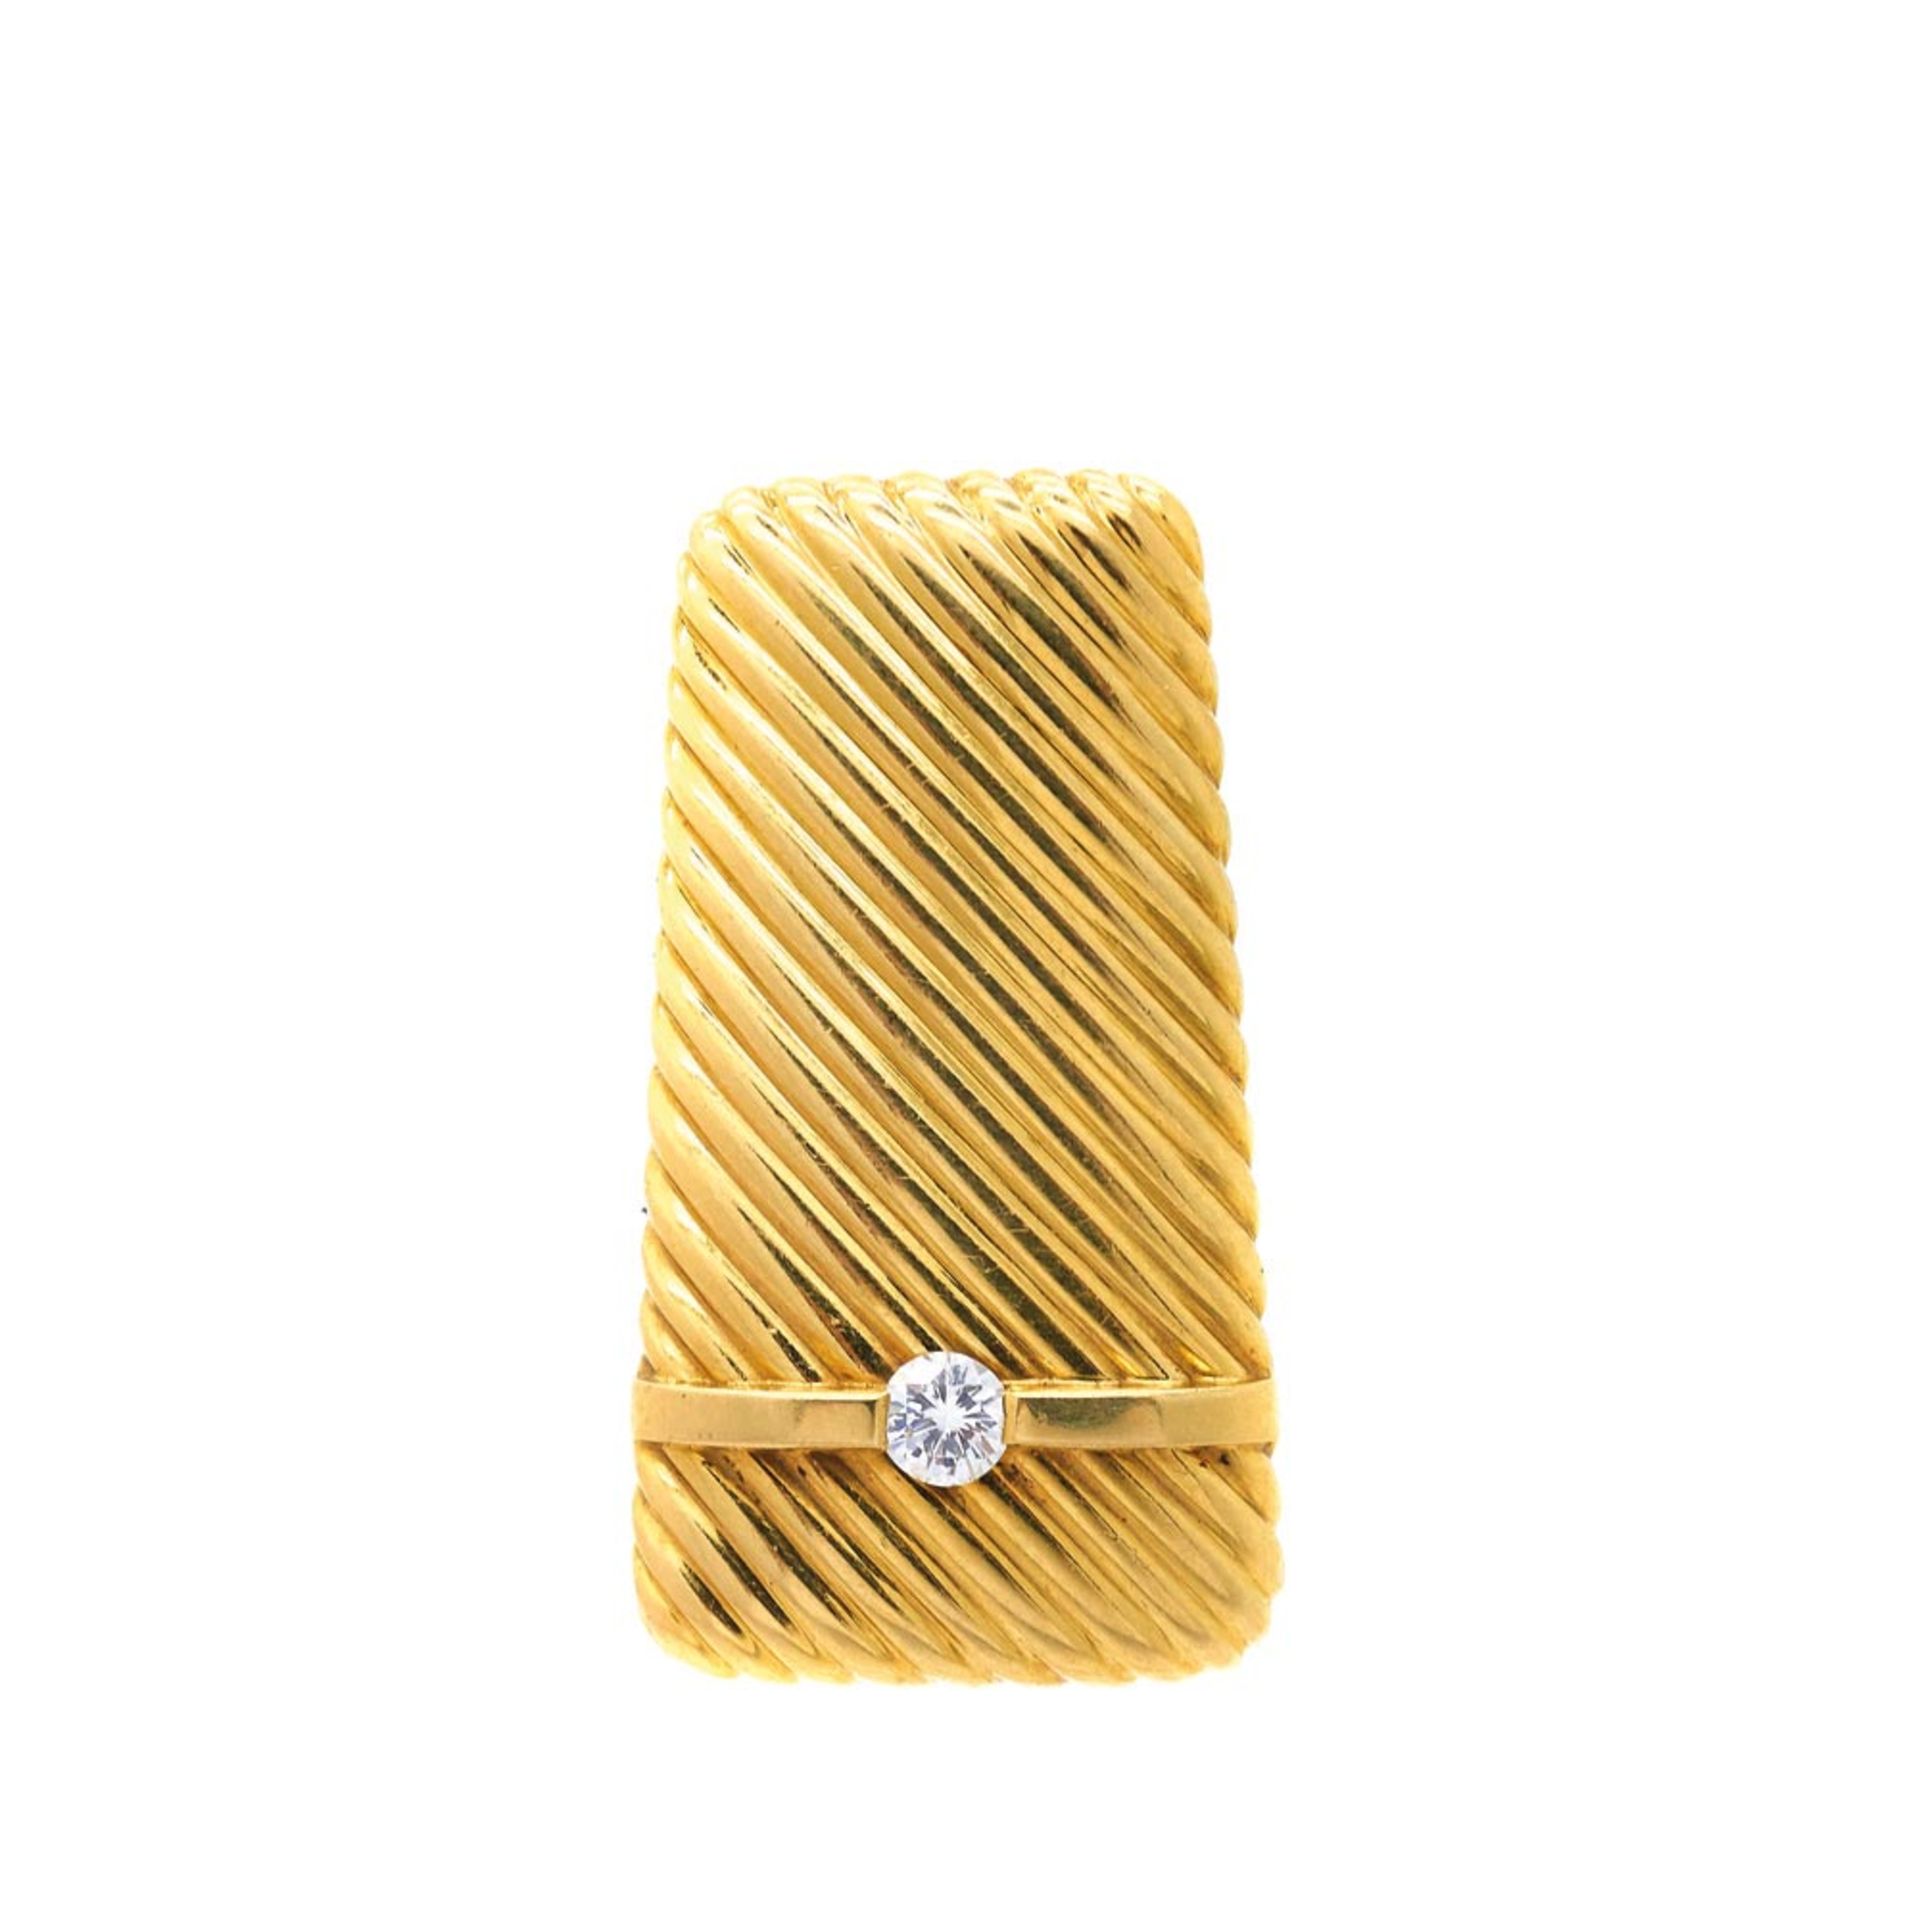 Gold and diamond pendant